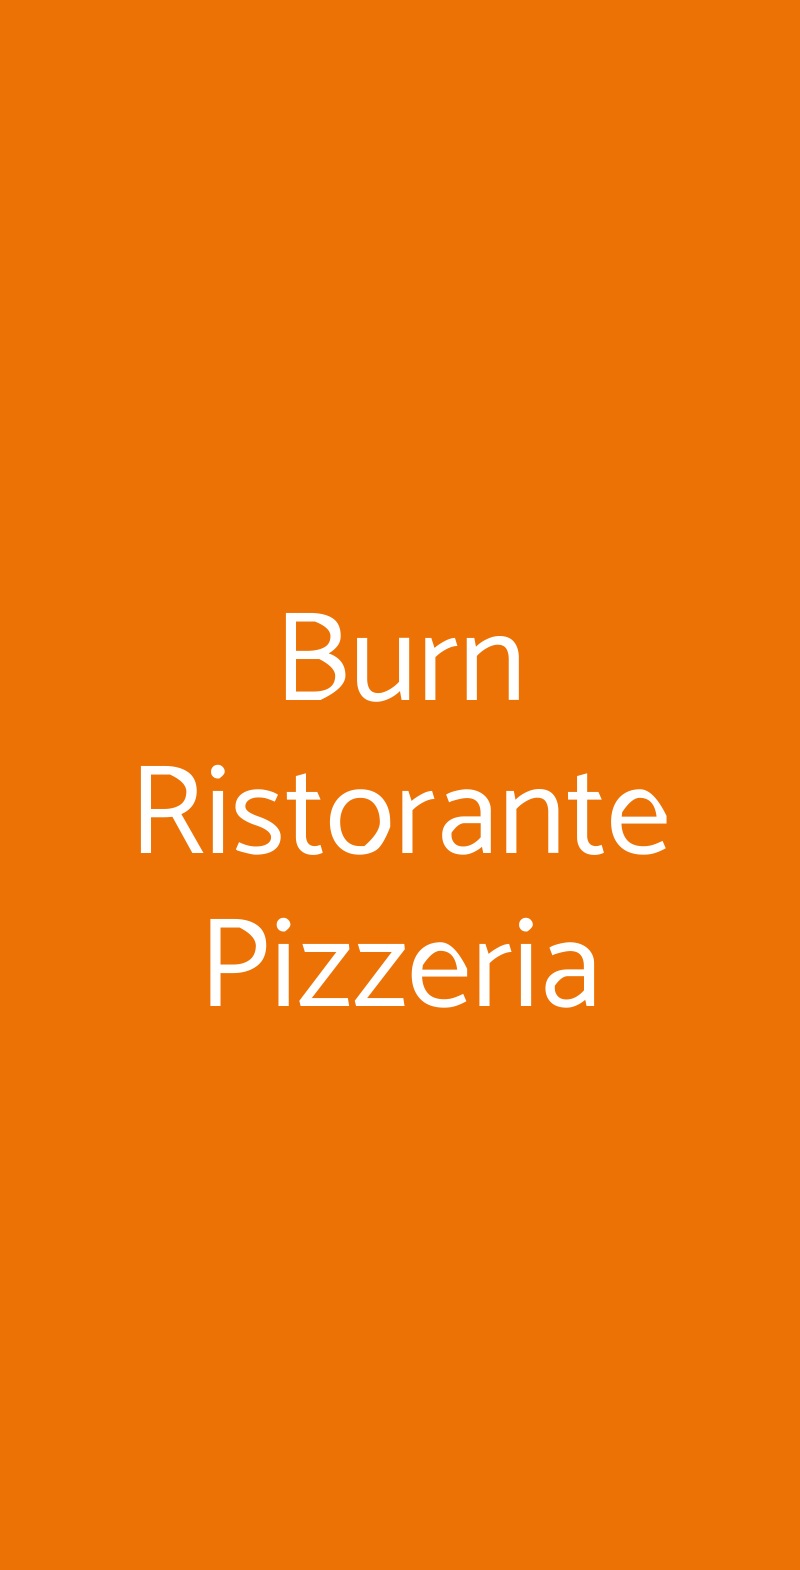 Burn Ristorante Pizzeria Macherio menù 1 pagina